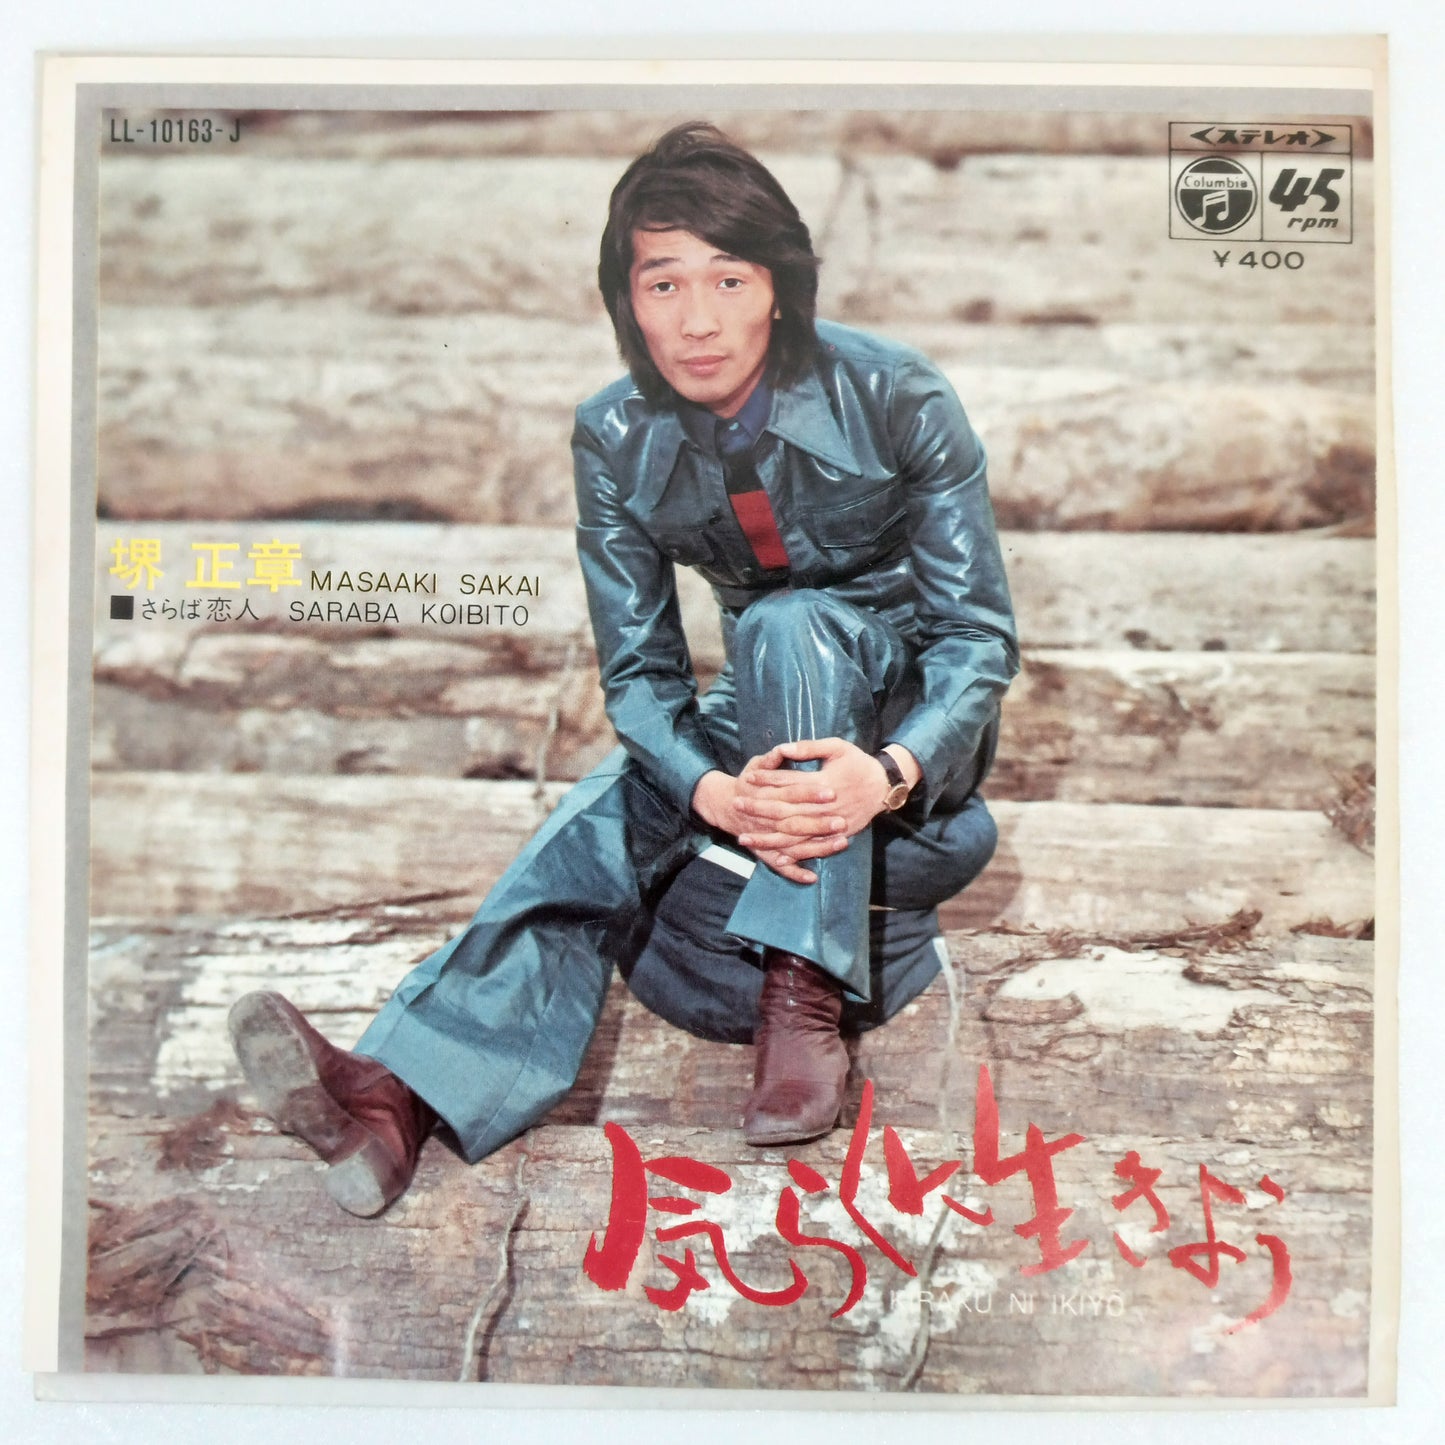 1971 Let's Live Carefree Masaaki Sakai B: Farewell Lovers Japanese record vintage